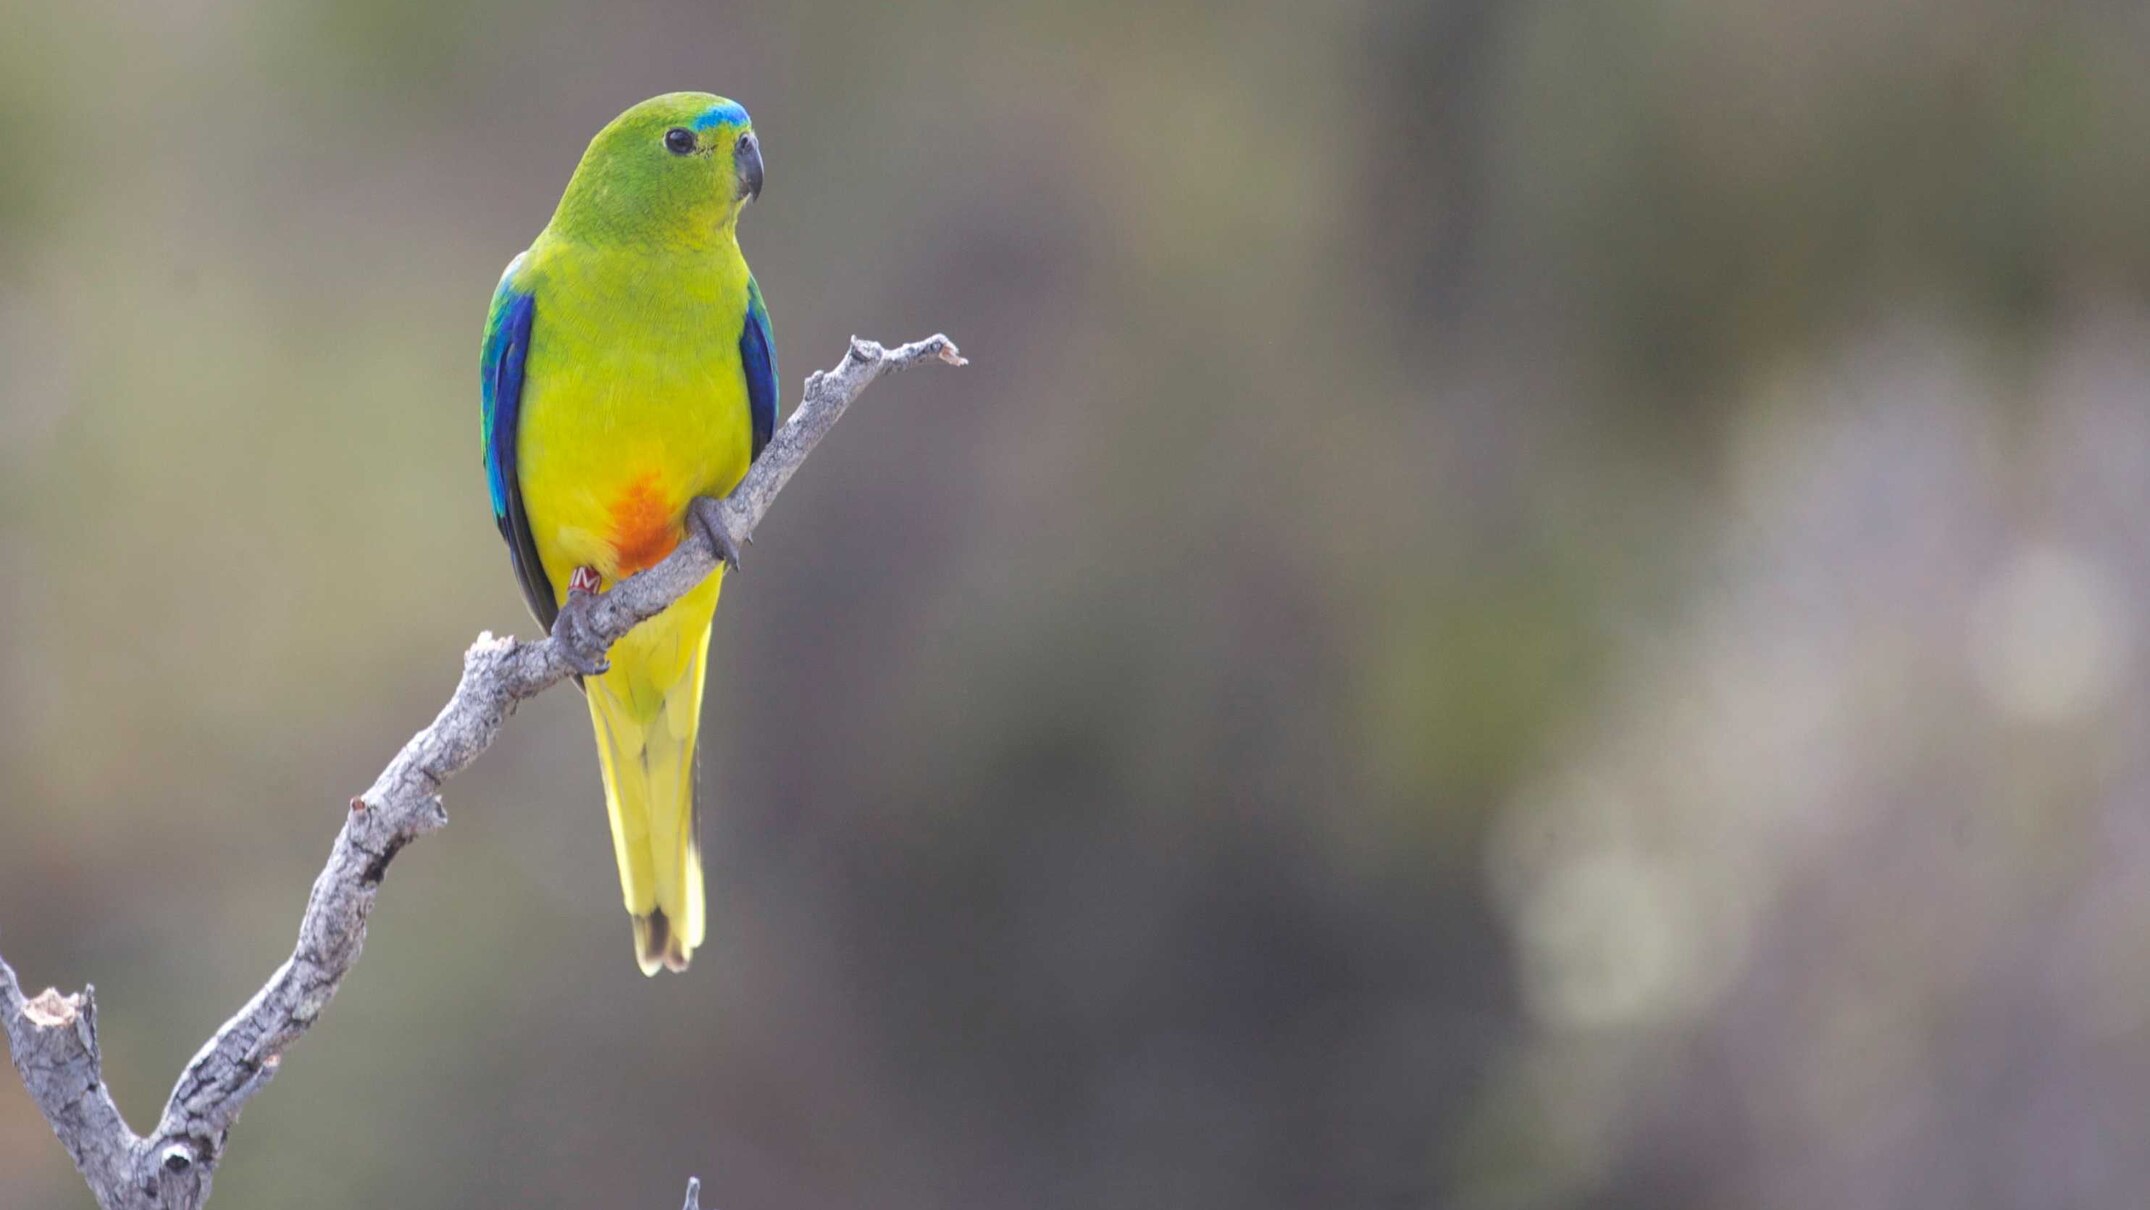 robbins island wind farm green-lit after threat to endangered orange-bellied parrot species dismissed on appeal